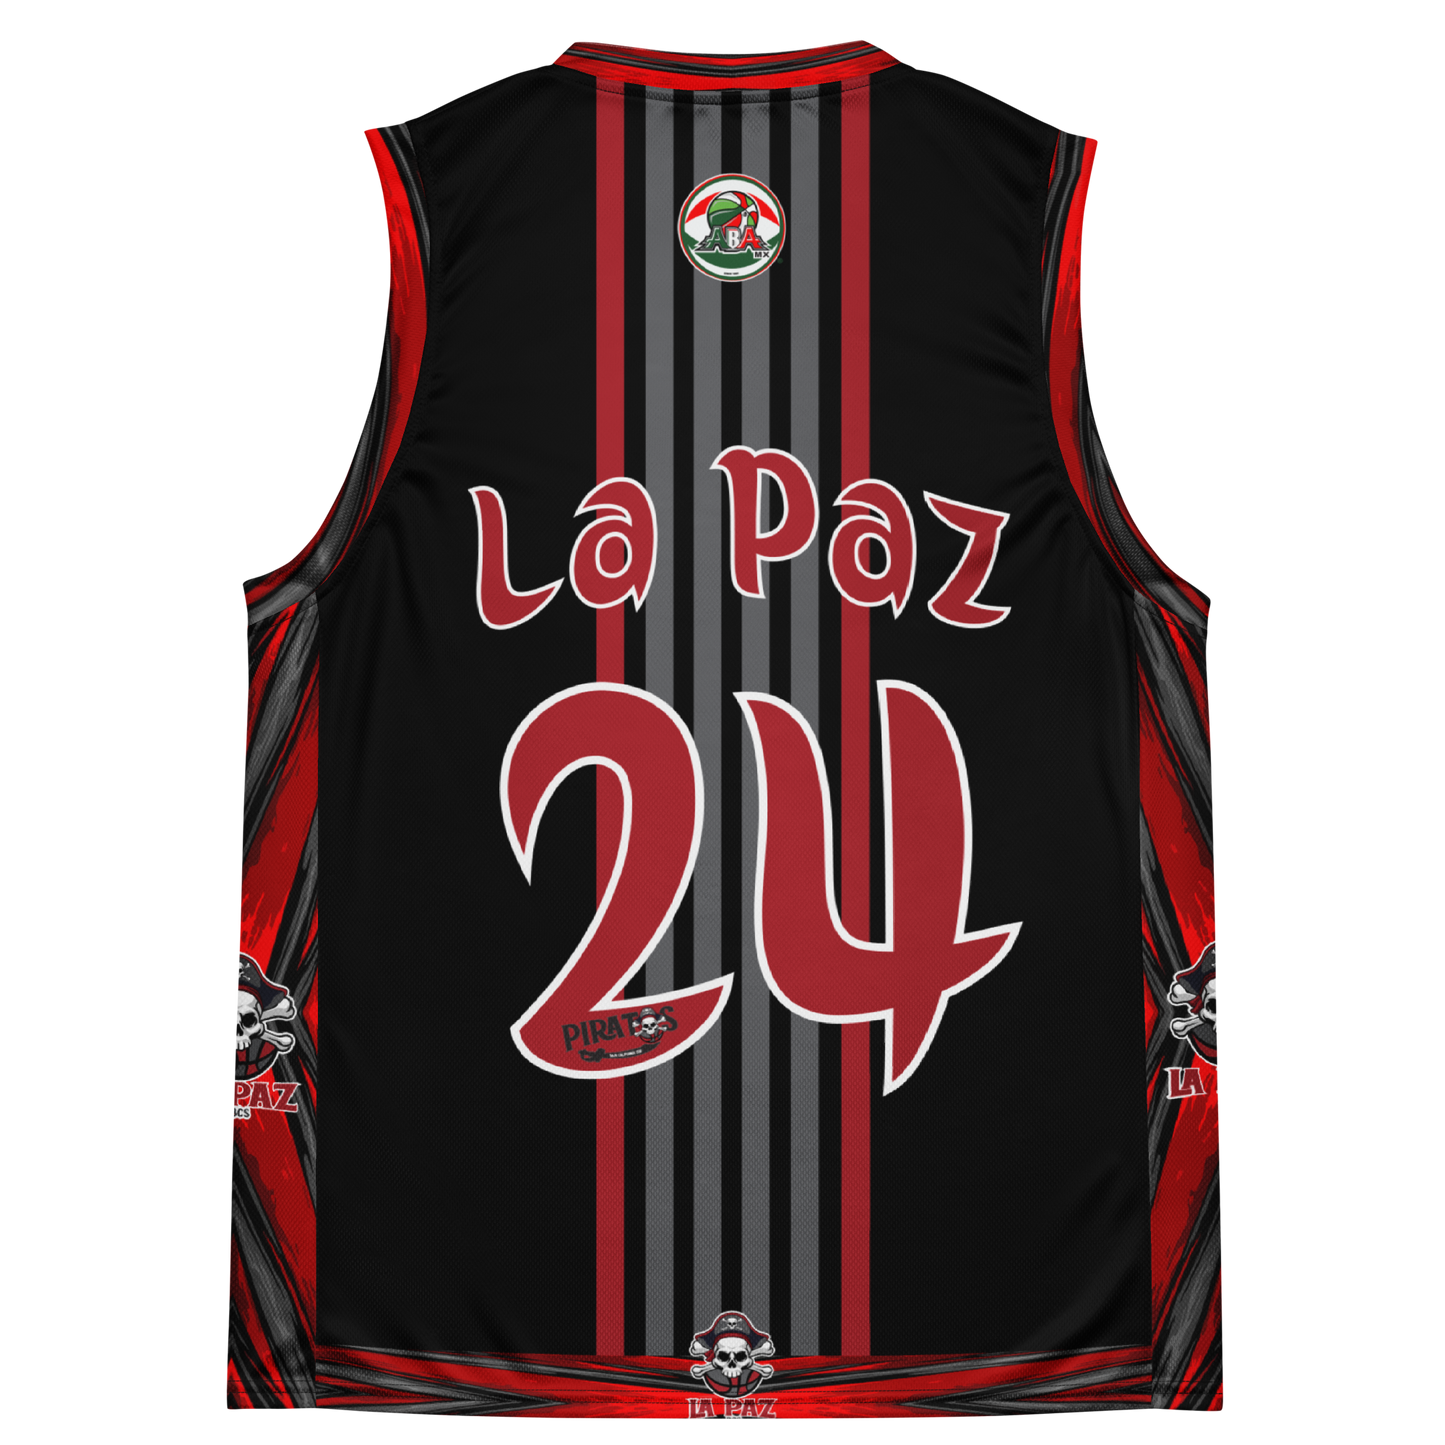 The La Paz Piratas Basketball Team's Black Jersey